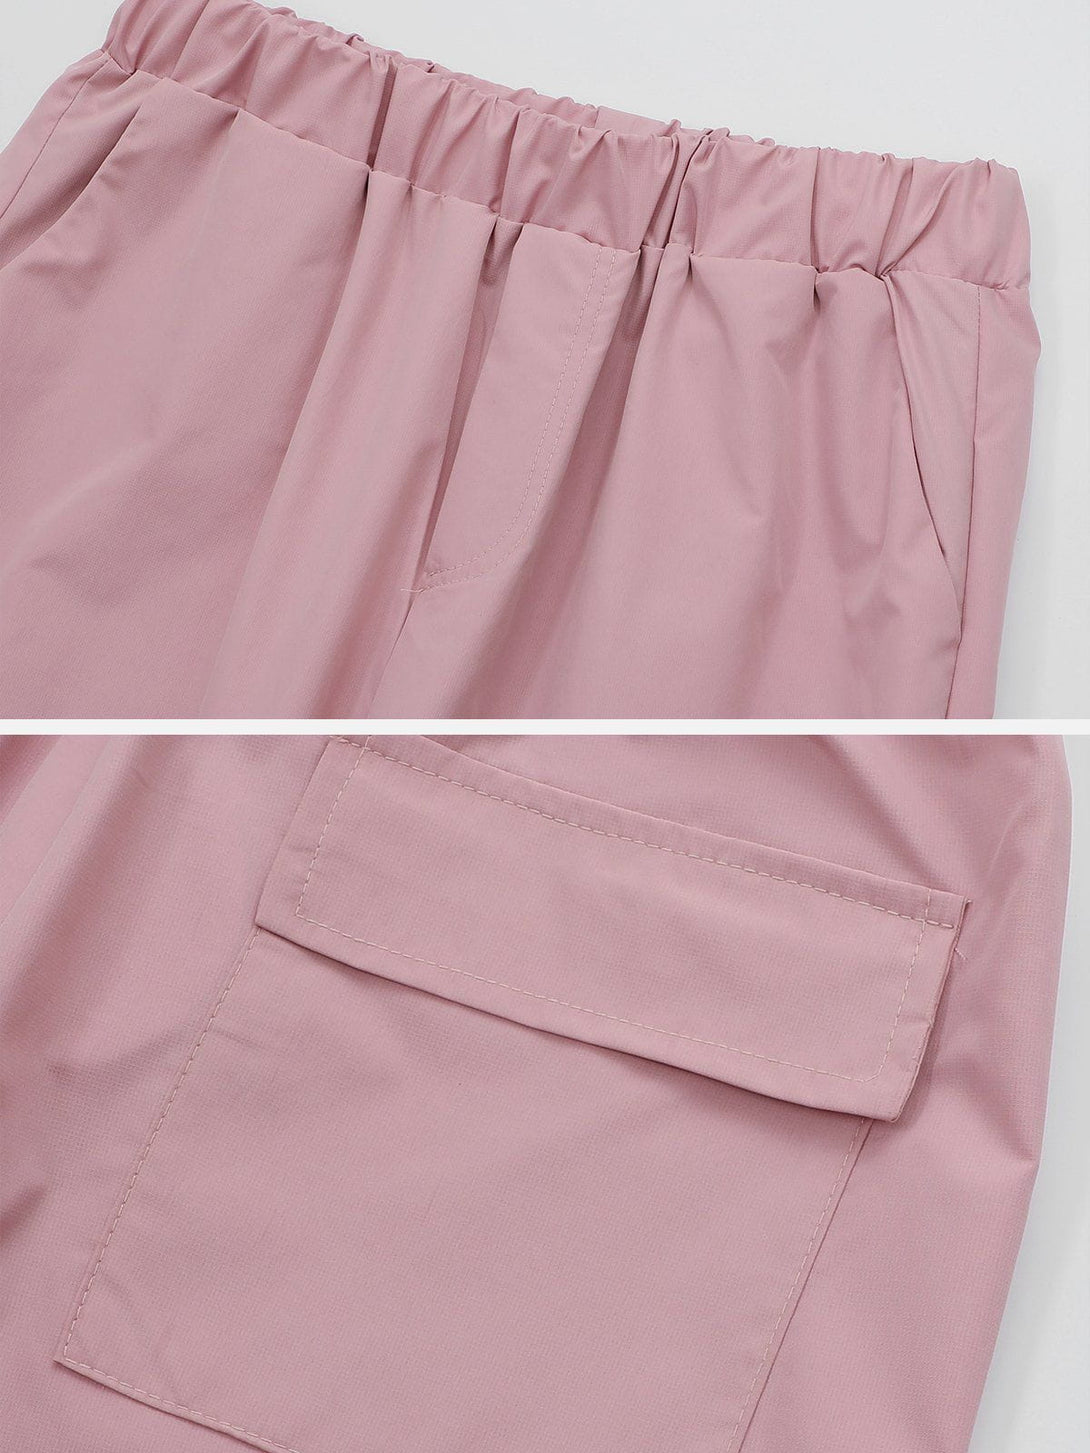 Levefly - Pocket Patchwork Cargo Pants - Streetwear Fashion - levefly.com